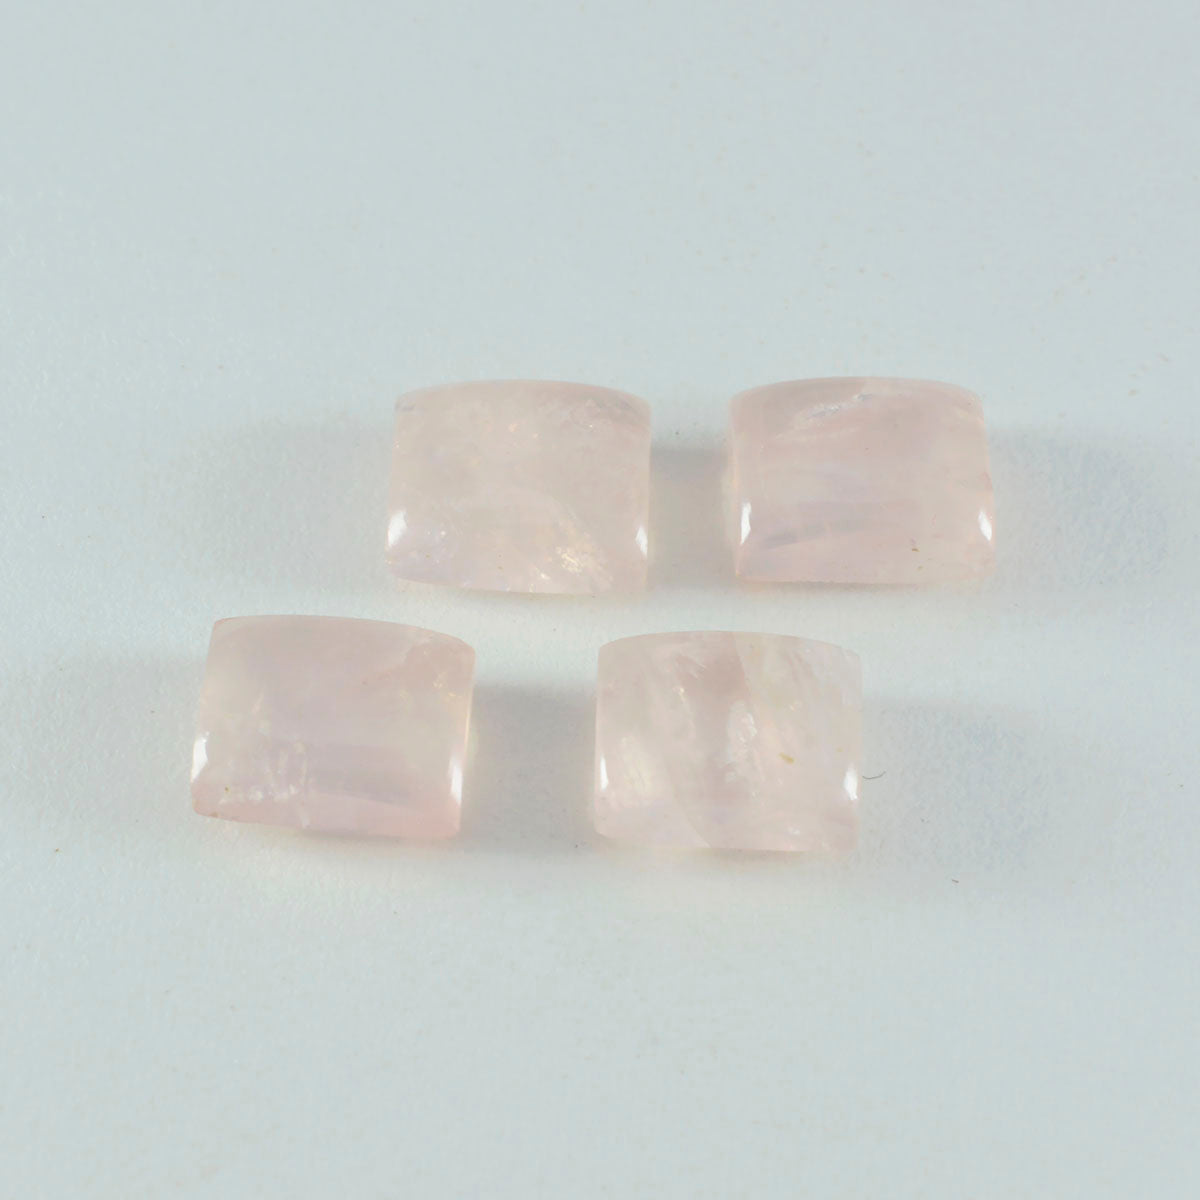 Riyogems 1PC Pink Rose Quartz Cabochon 10x14 mm Octagon Shape startling Quality Gemstone